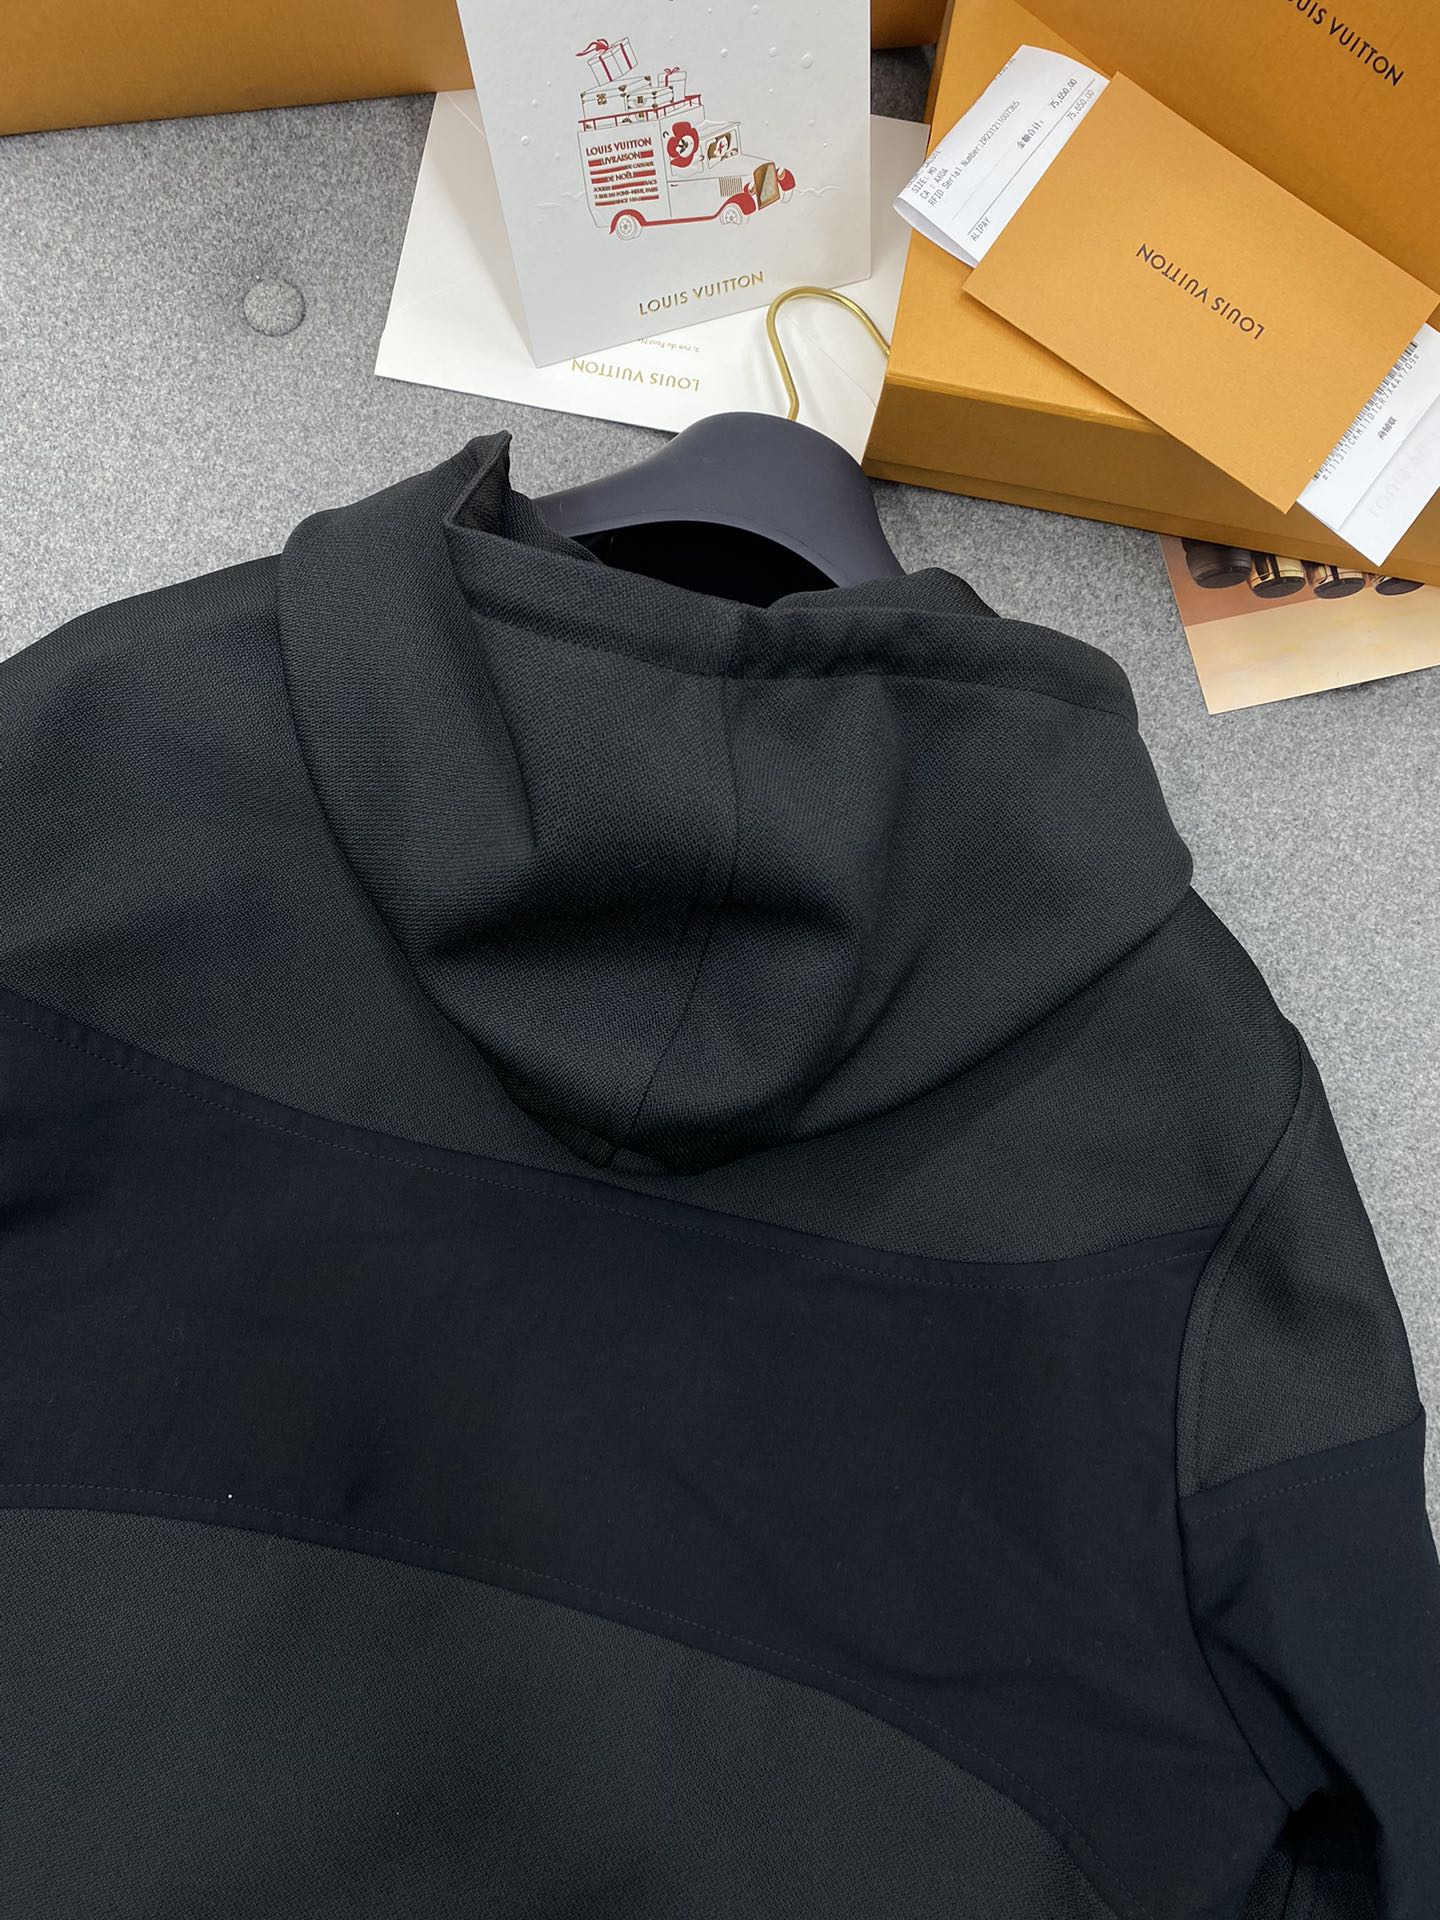 TJ셀러 / 루이비통 자켓 ,  𝗟𝗢𝗨𝗜𝗦 𝗩𝗨𝗜𝗧𝗧𝗢𝗡 후드 튜닉 재킷(예약판매)